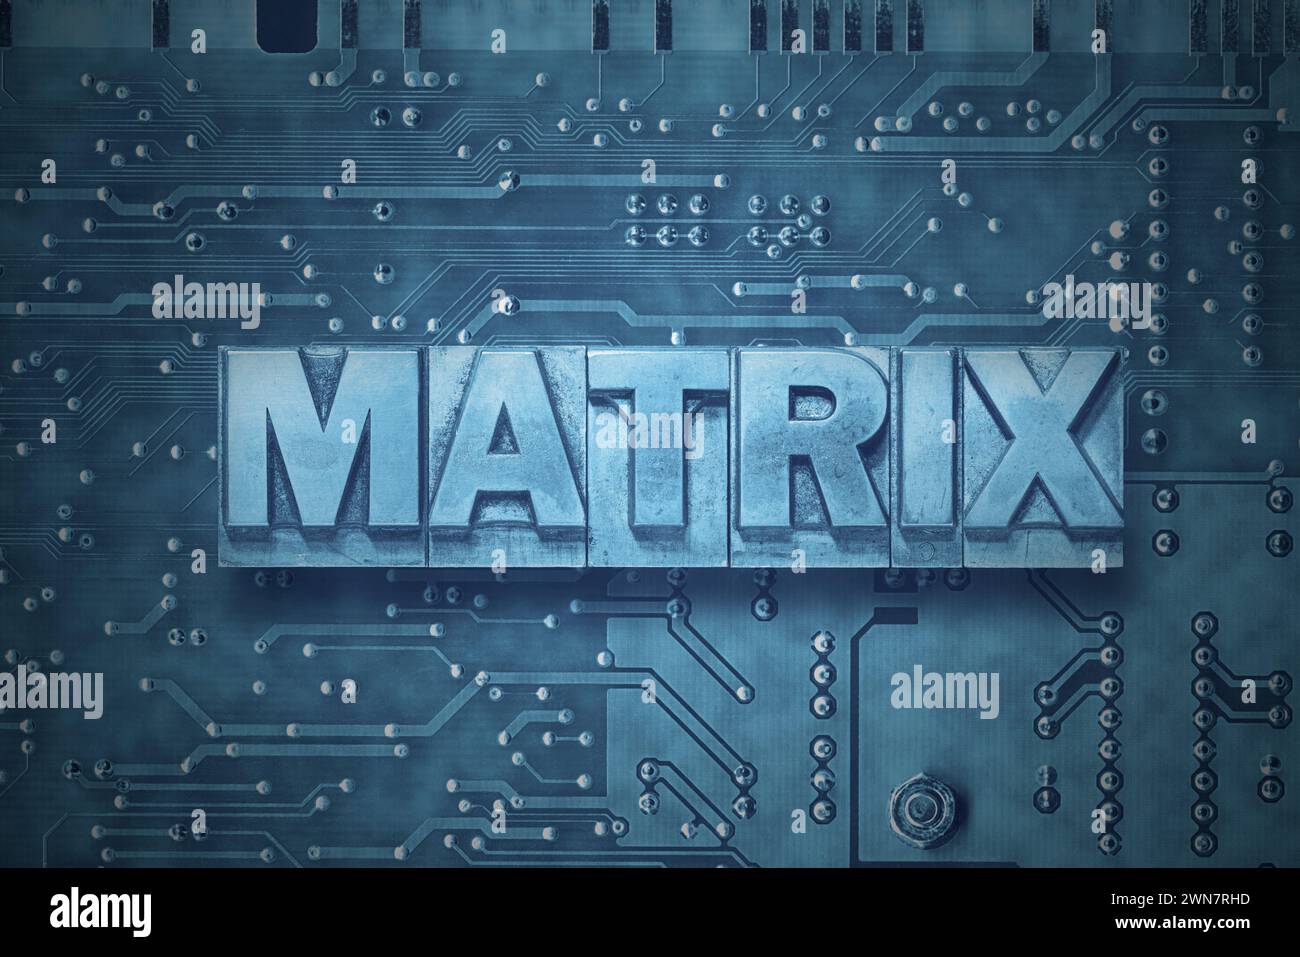 matrix word made from metallic letterpress blocks on the pc board background Stock Photo